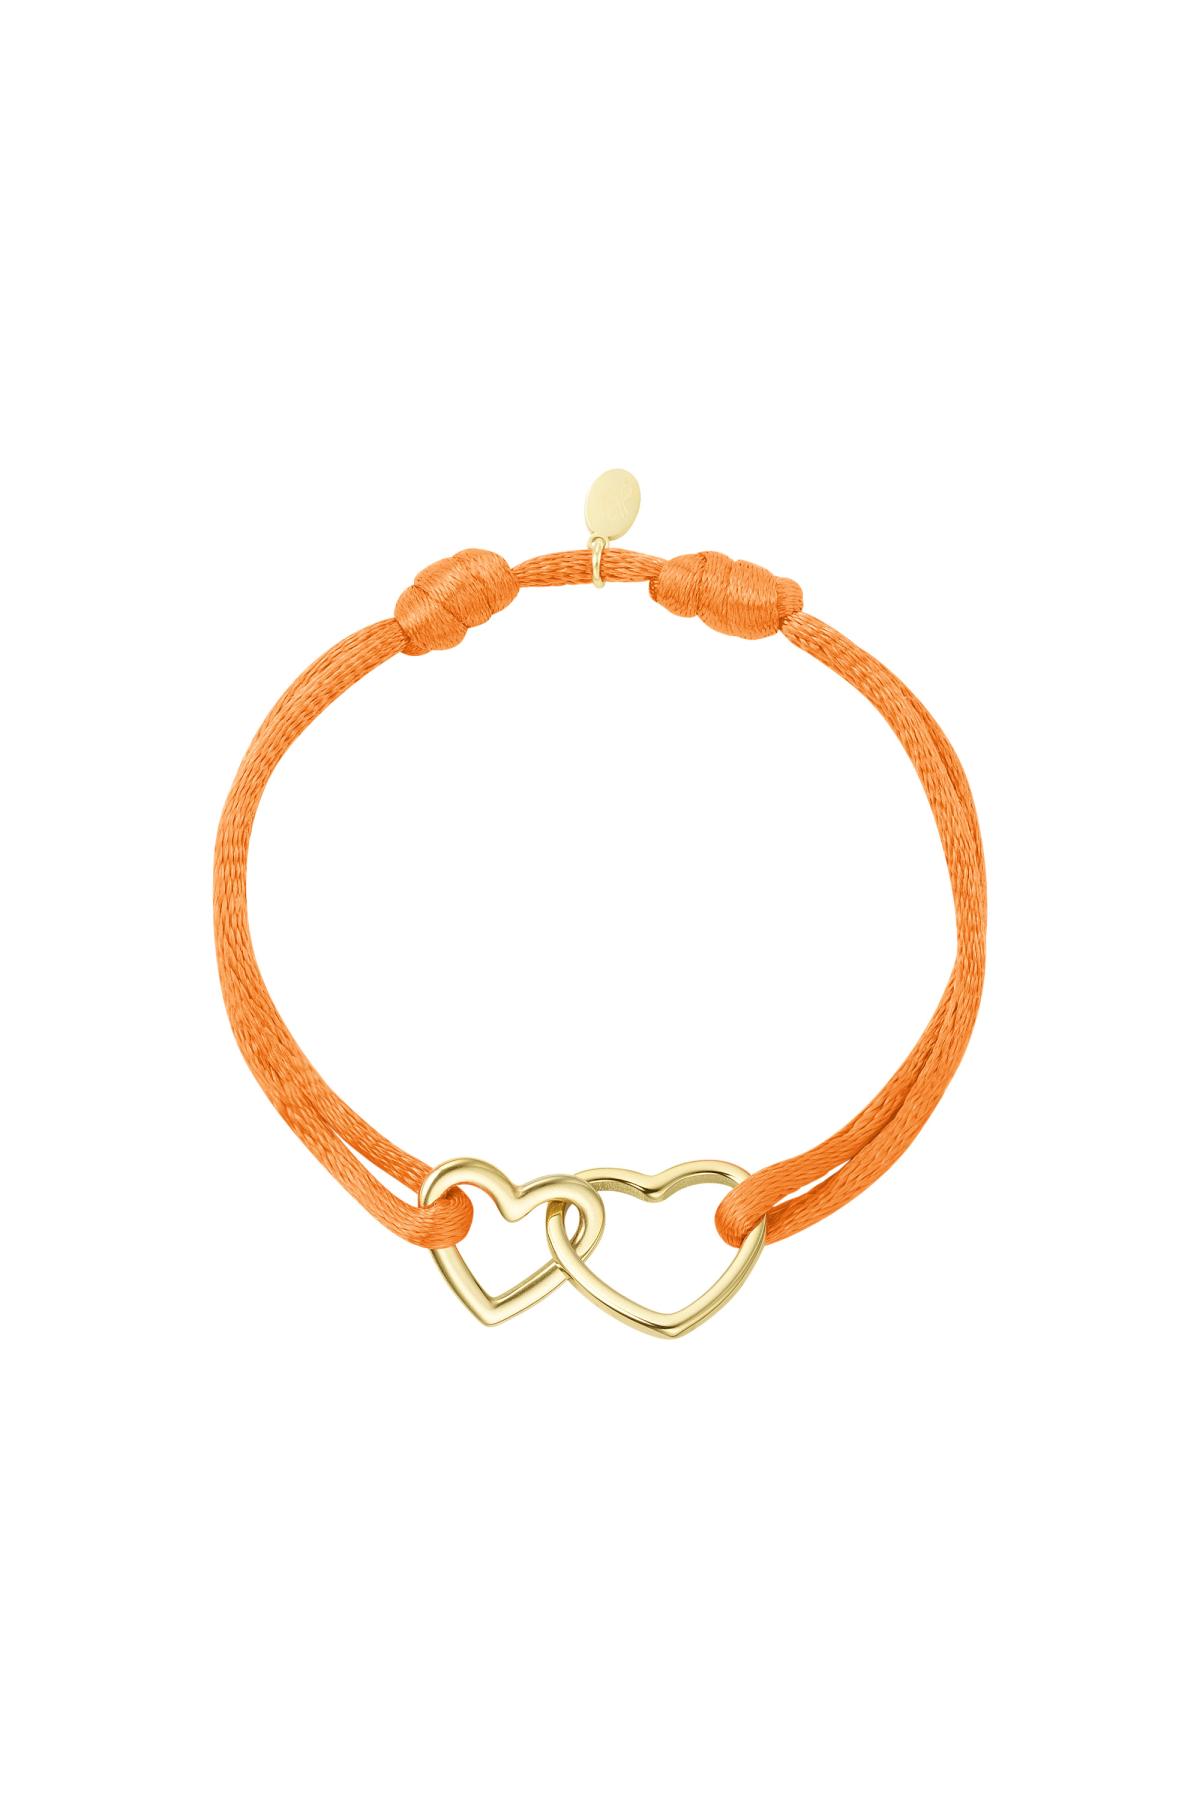 Bracelet tissu coeurs Orange & Or Acier inoxydable h5 